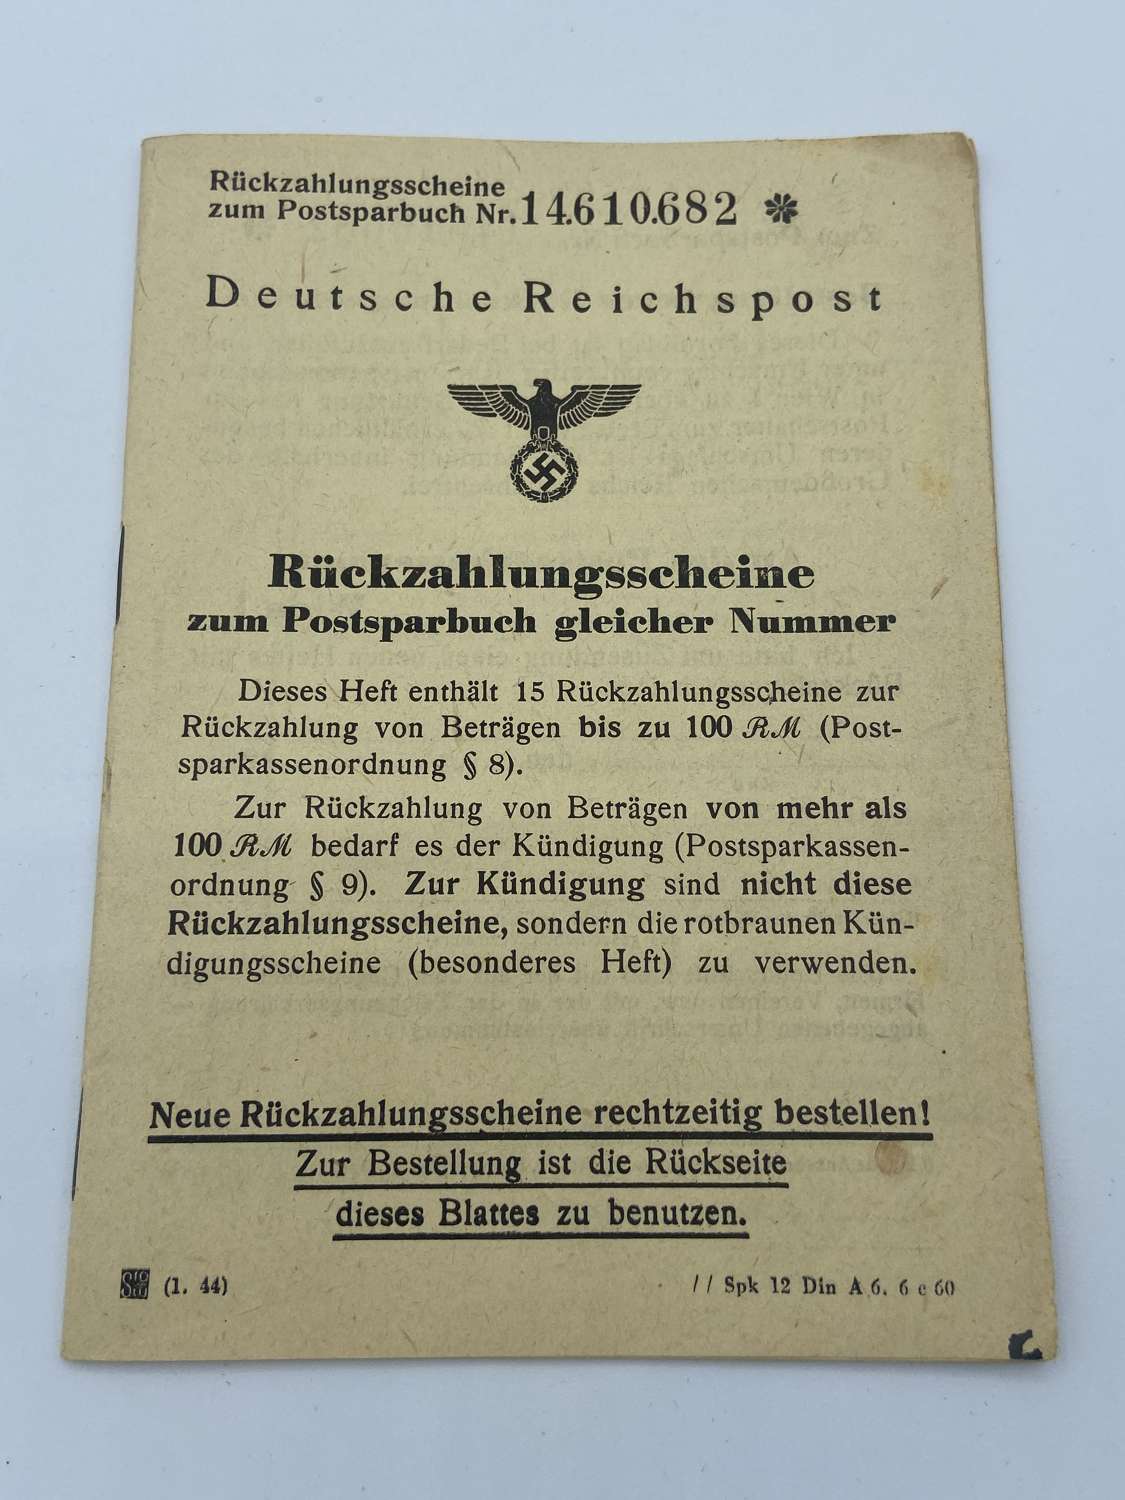 WW2 German Postal Savings Account Booket